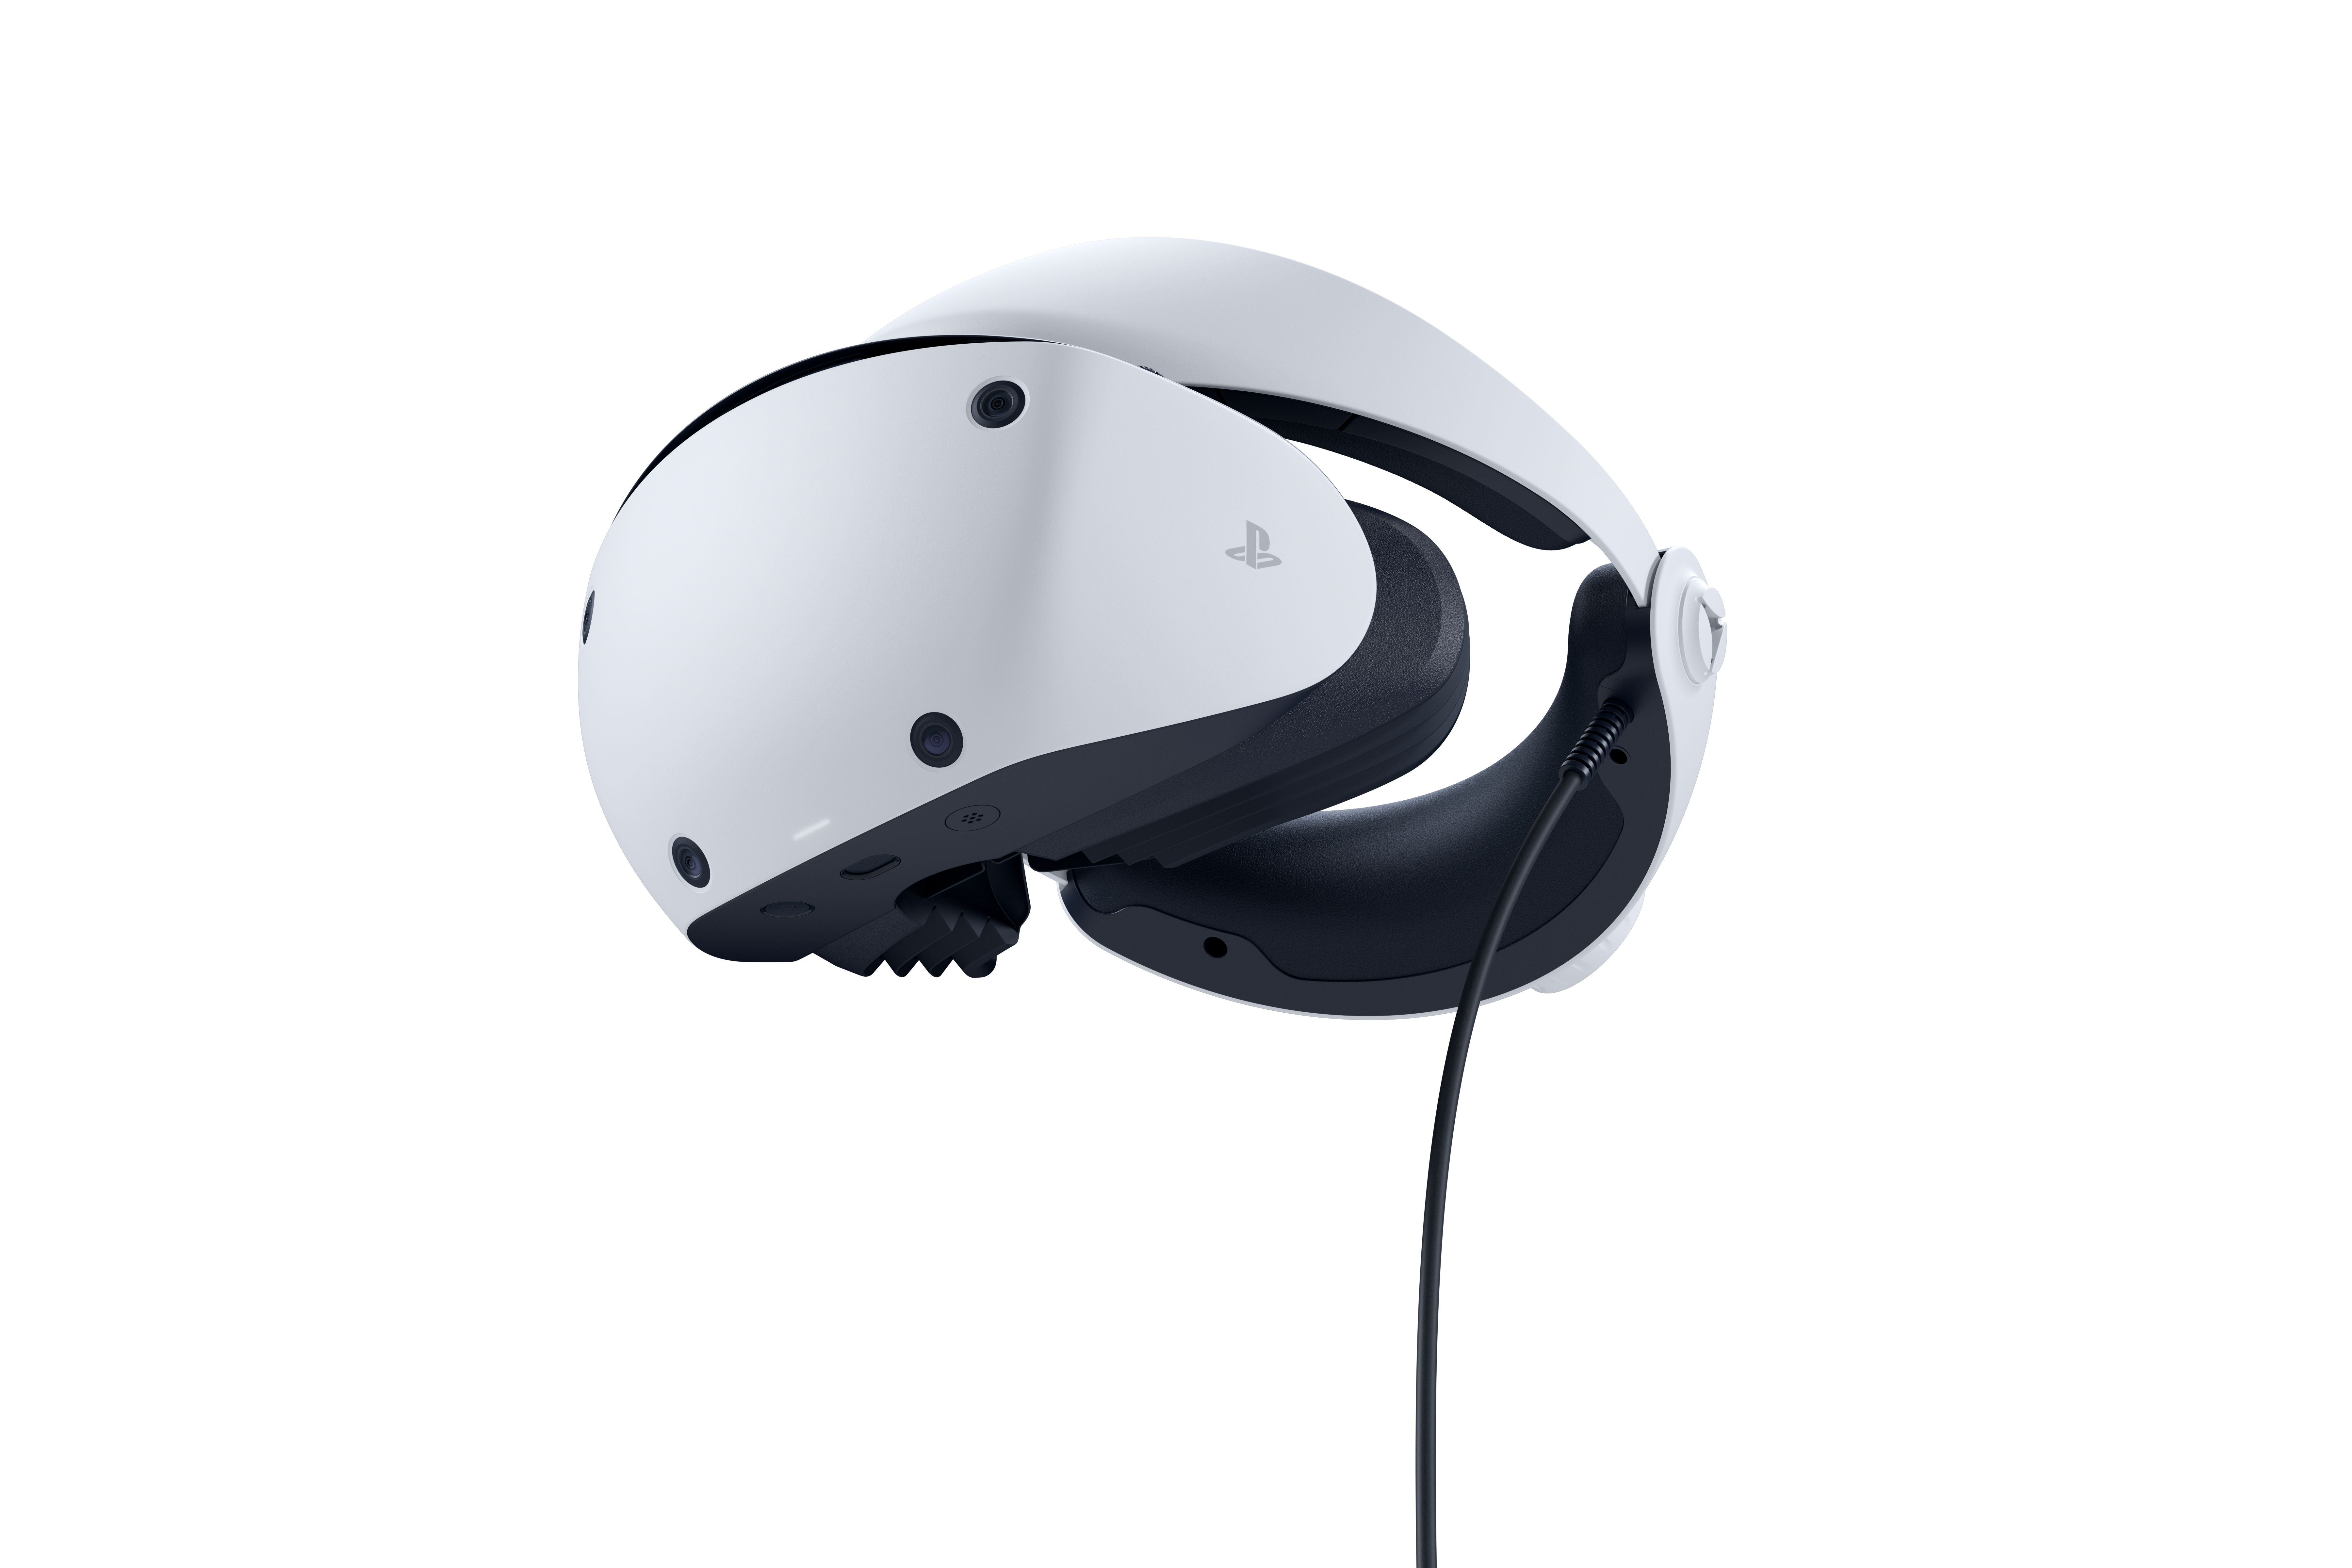 PlayStation VR2: Perguntas Frequentes – PlayStation.Blog BR